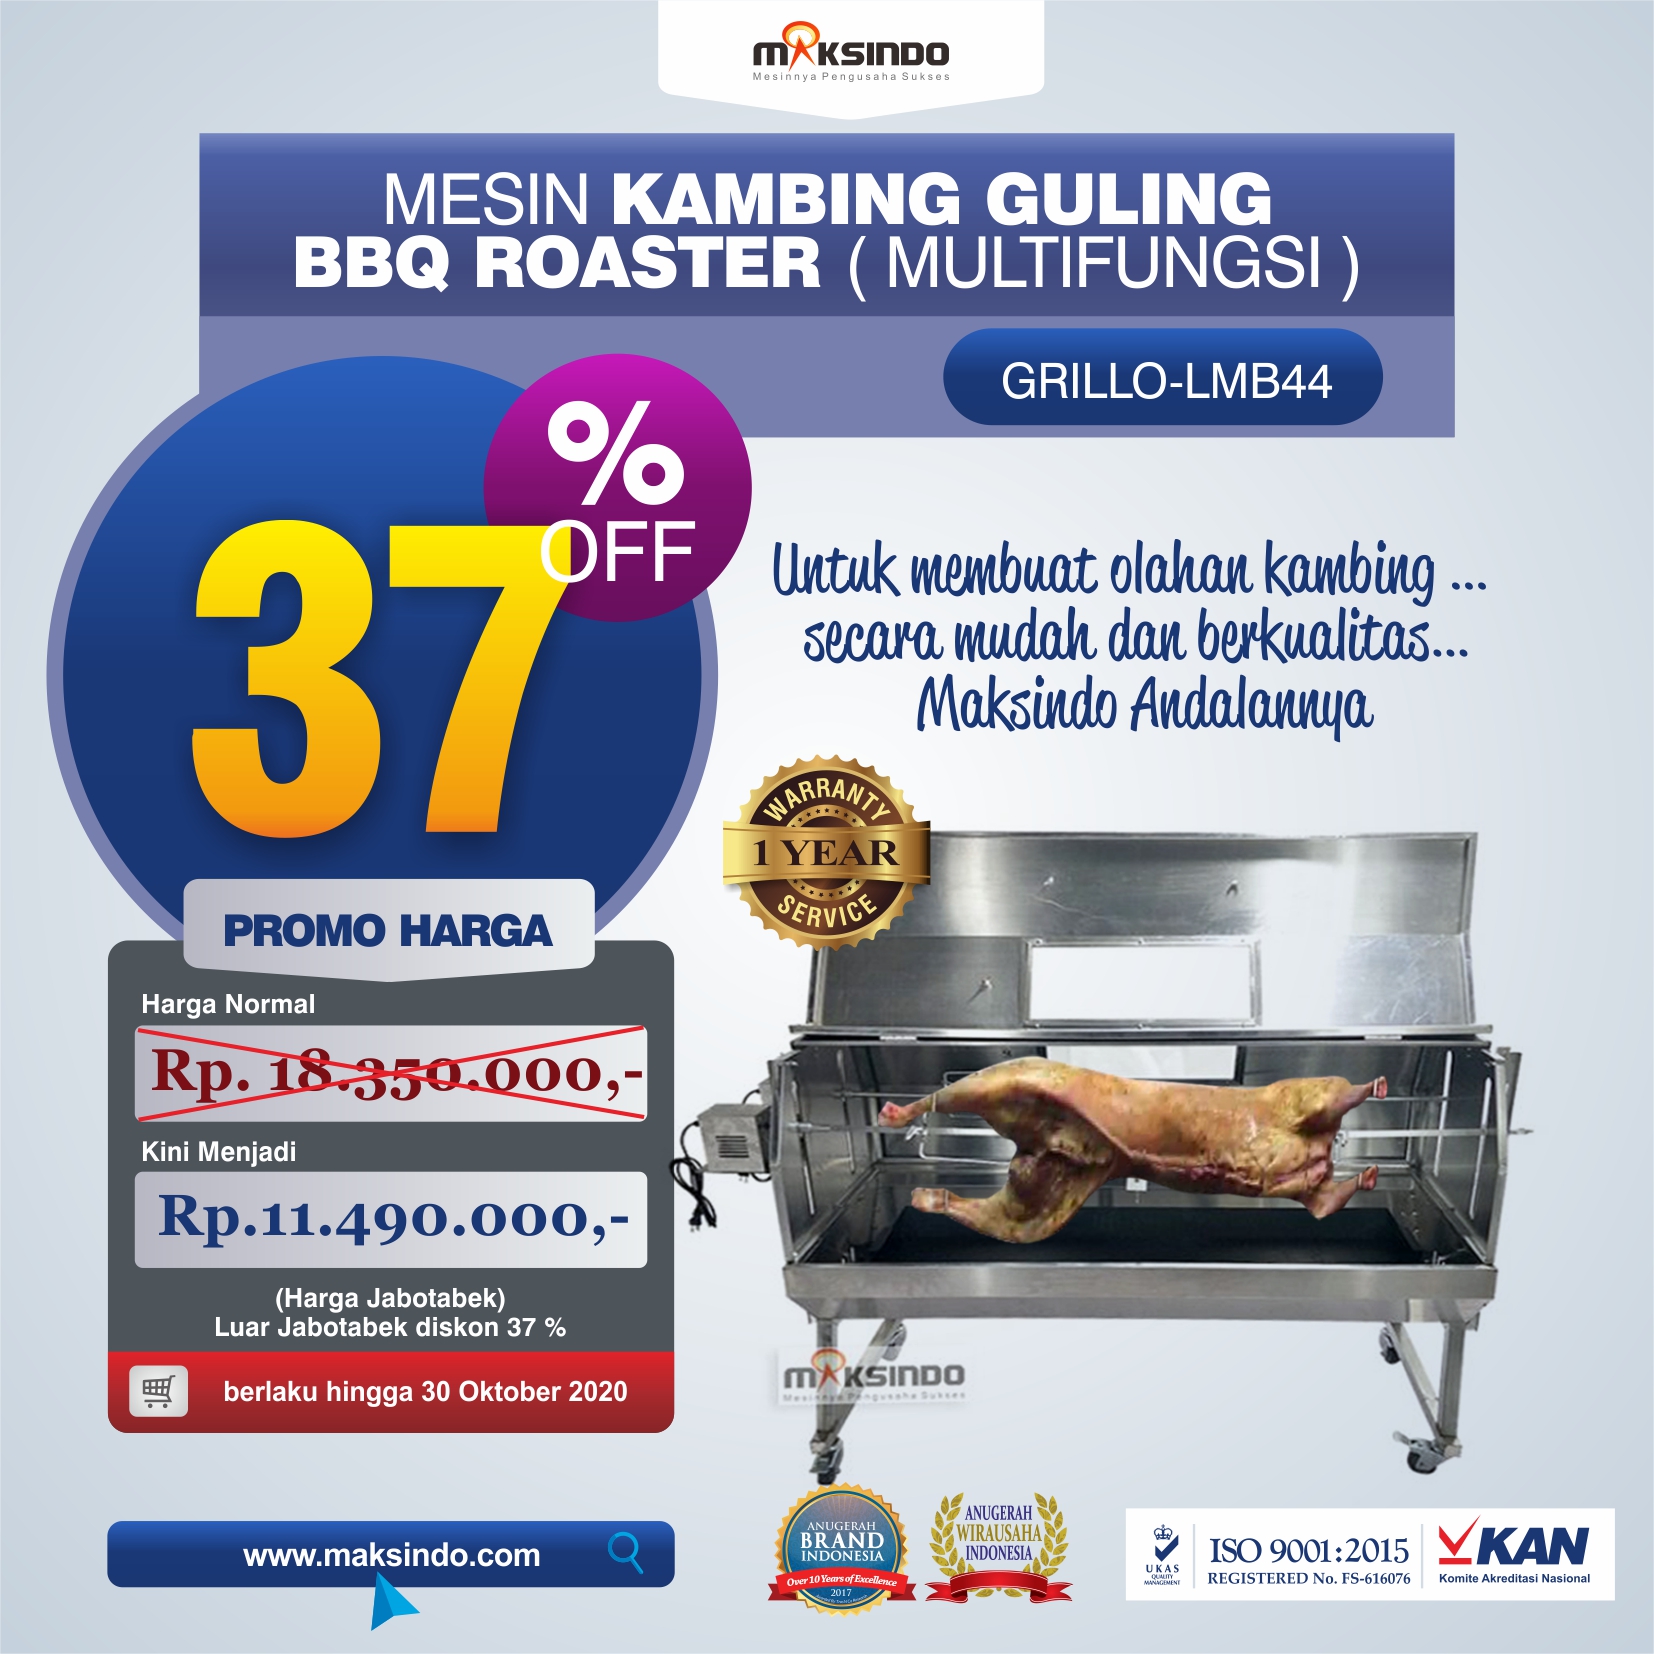 Jual Mesin Kambing Guling BBQ Roaster (GRILLO-LMB44) di Jakarta